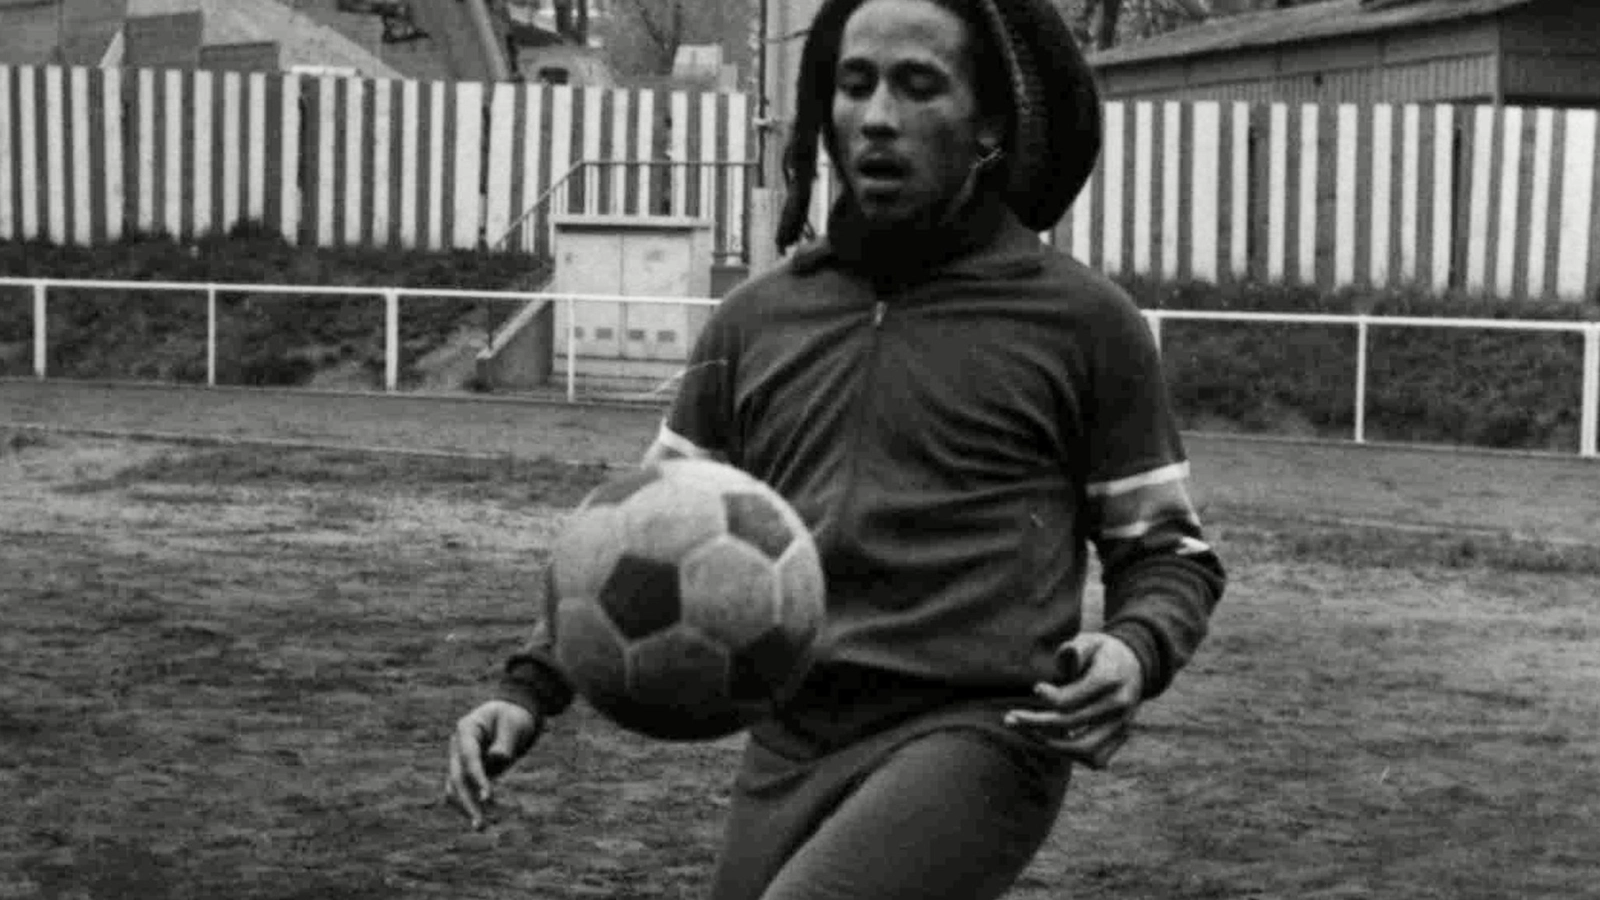 Bob Marley To Feature On Irish Club's Jersey